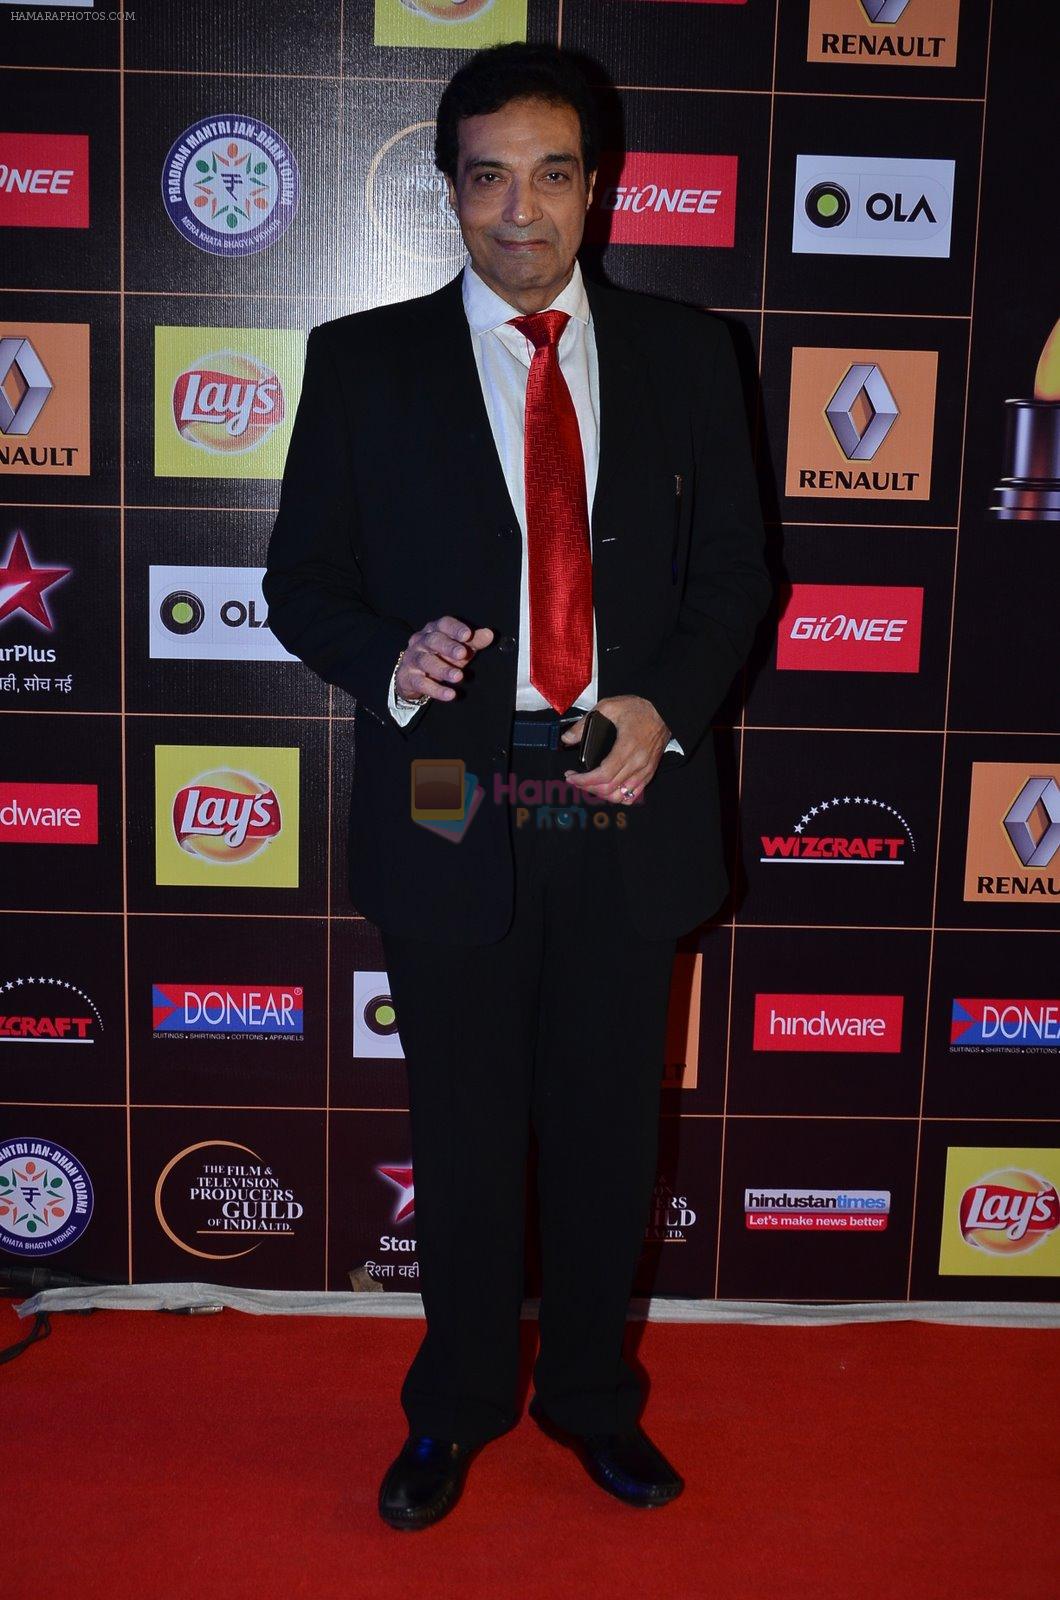 Dheeraj Kumar at Producers Guild Awards 2015 in Mumbai on 11th Jan 2015